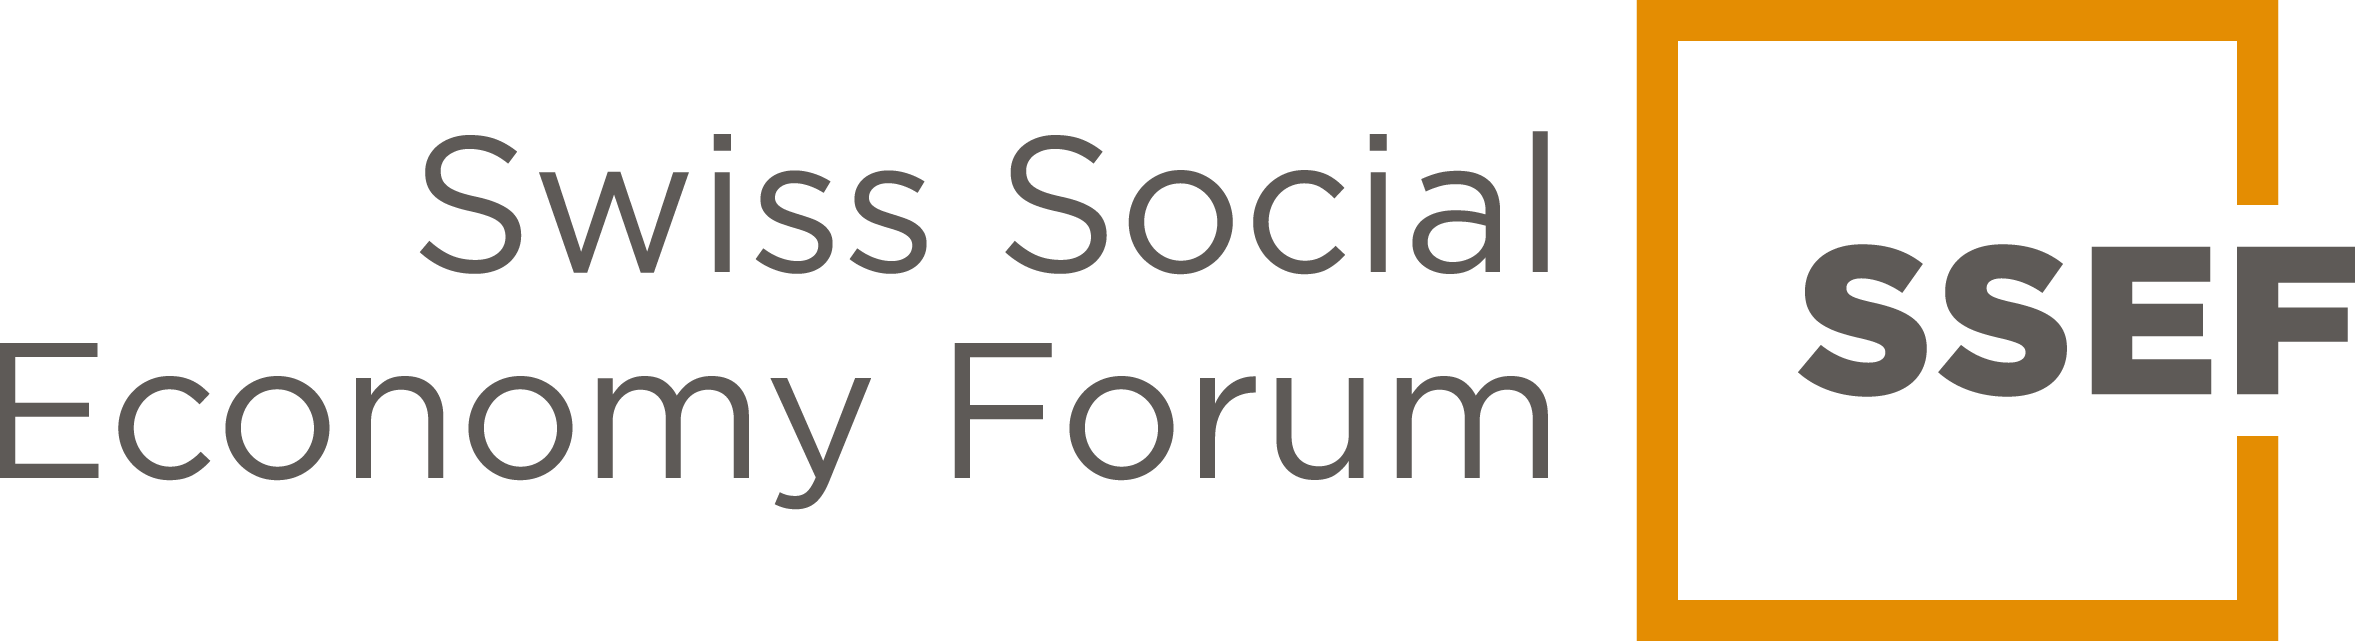 Swiss Social Economy Forum 7. Mai 2021